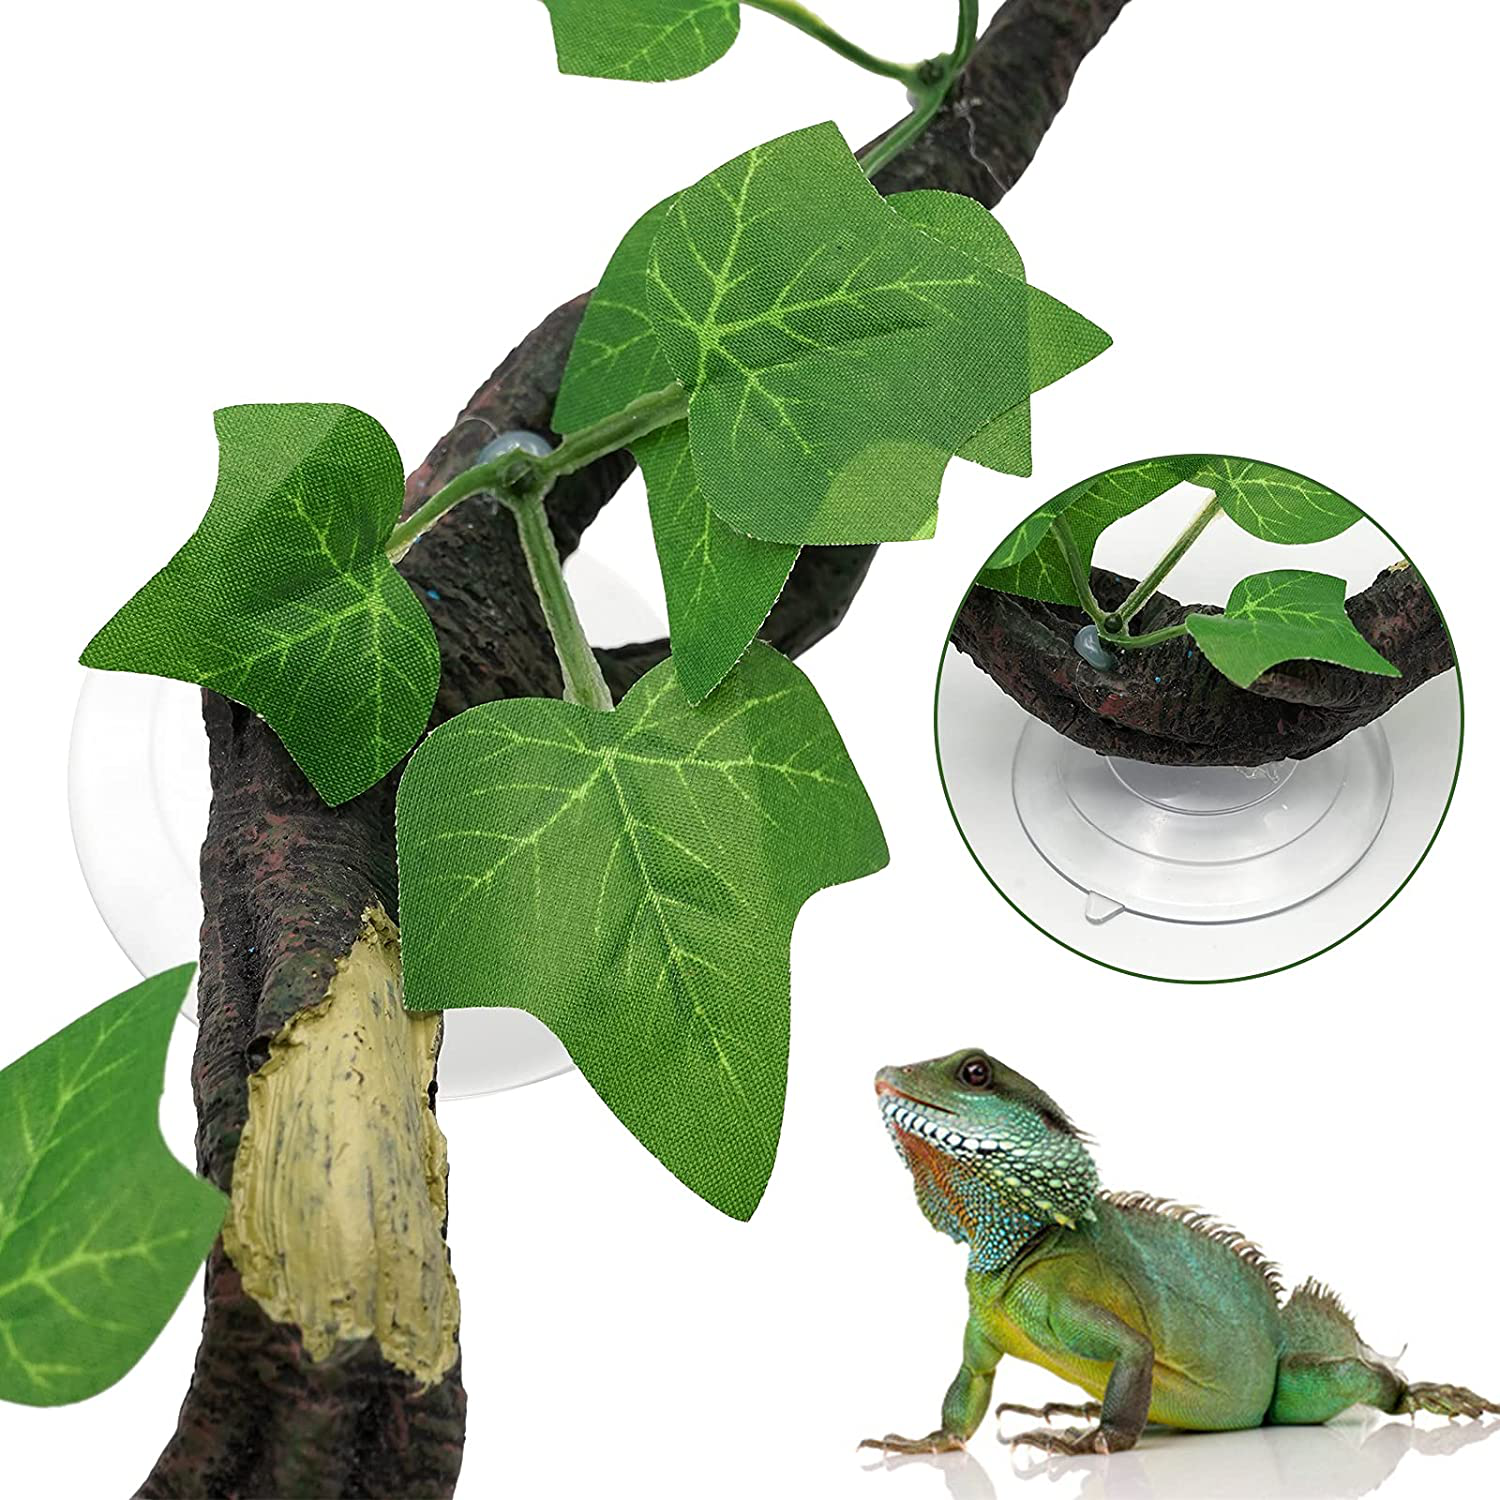 NOMAL Reptile Climbing Branch Terrarium Plant Decoration with Suction Cup for Bearded Dragons Lizards Geckos Amphibian Habitat Decor